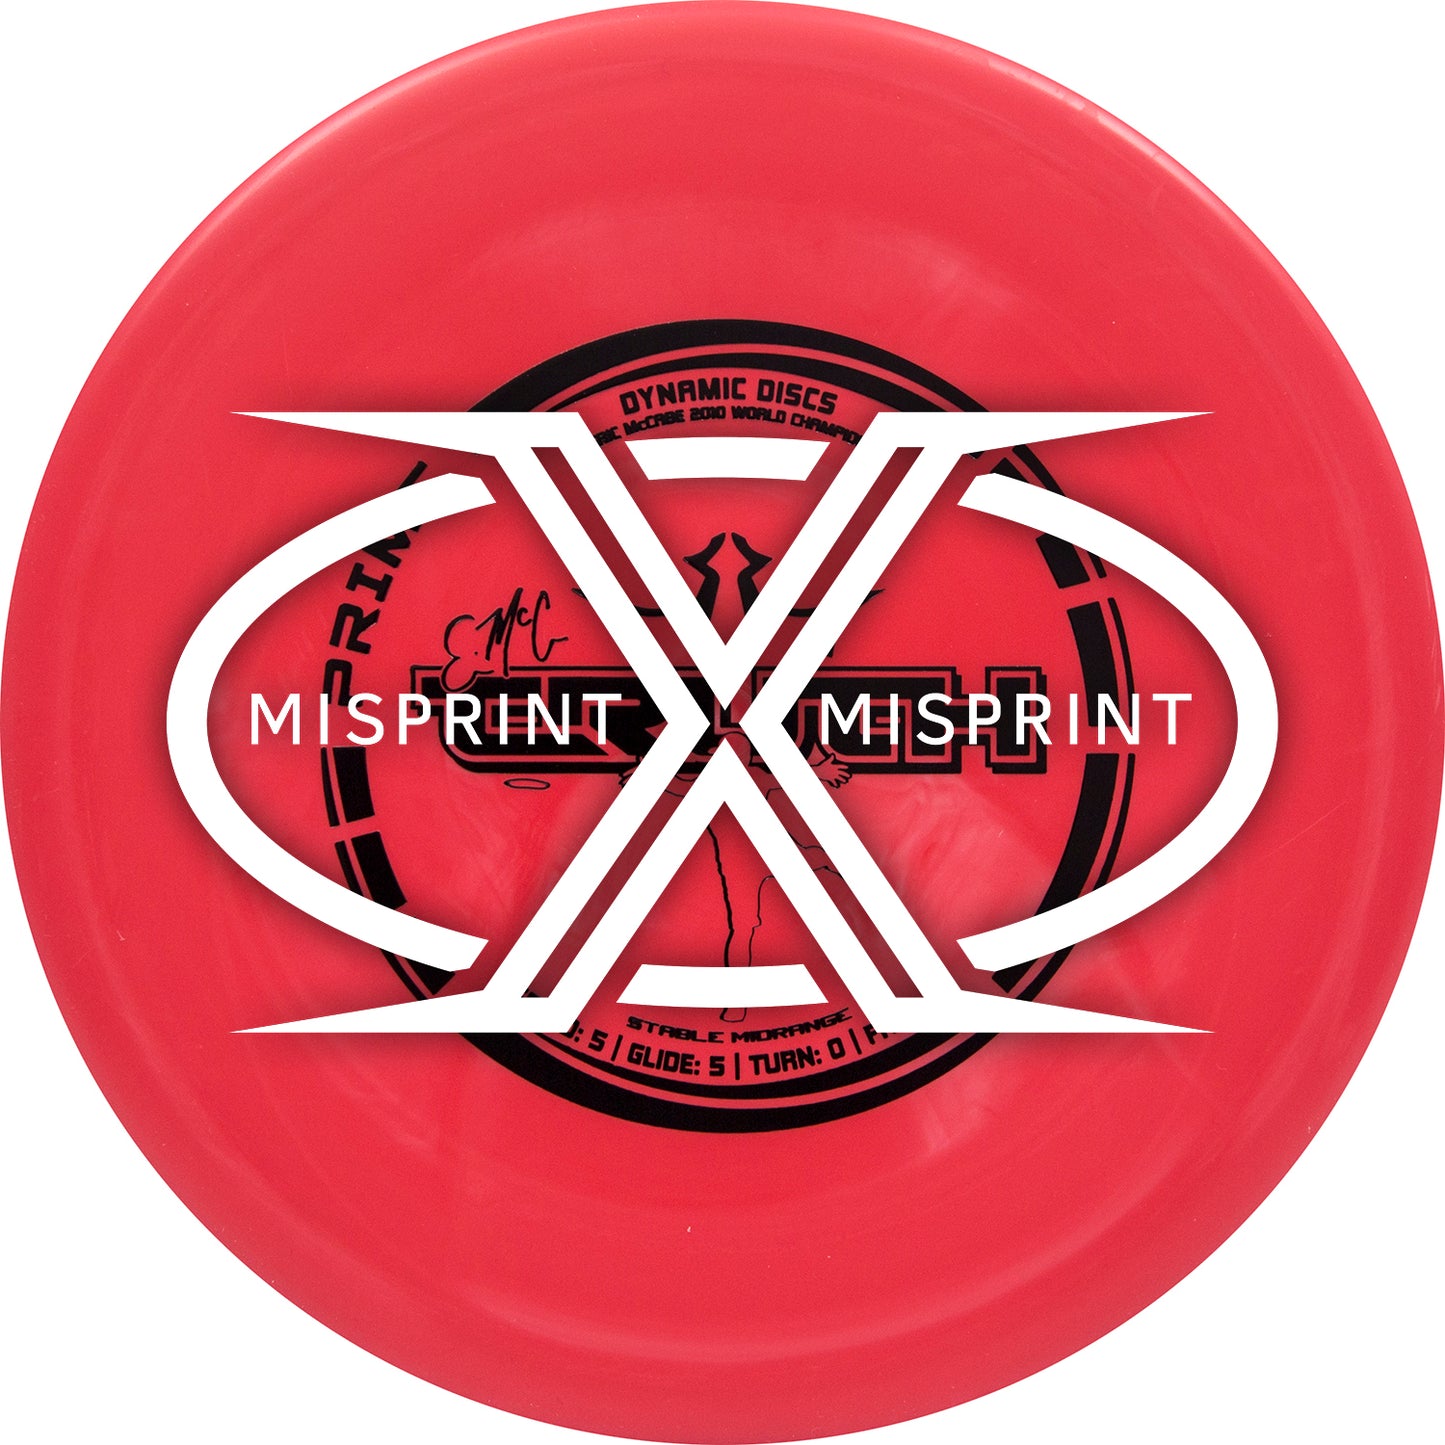 Misprint Dynamic Discs Prime EMAC Truth